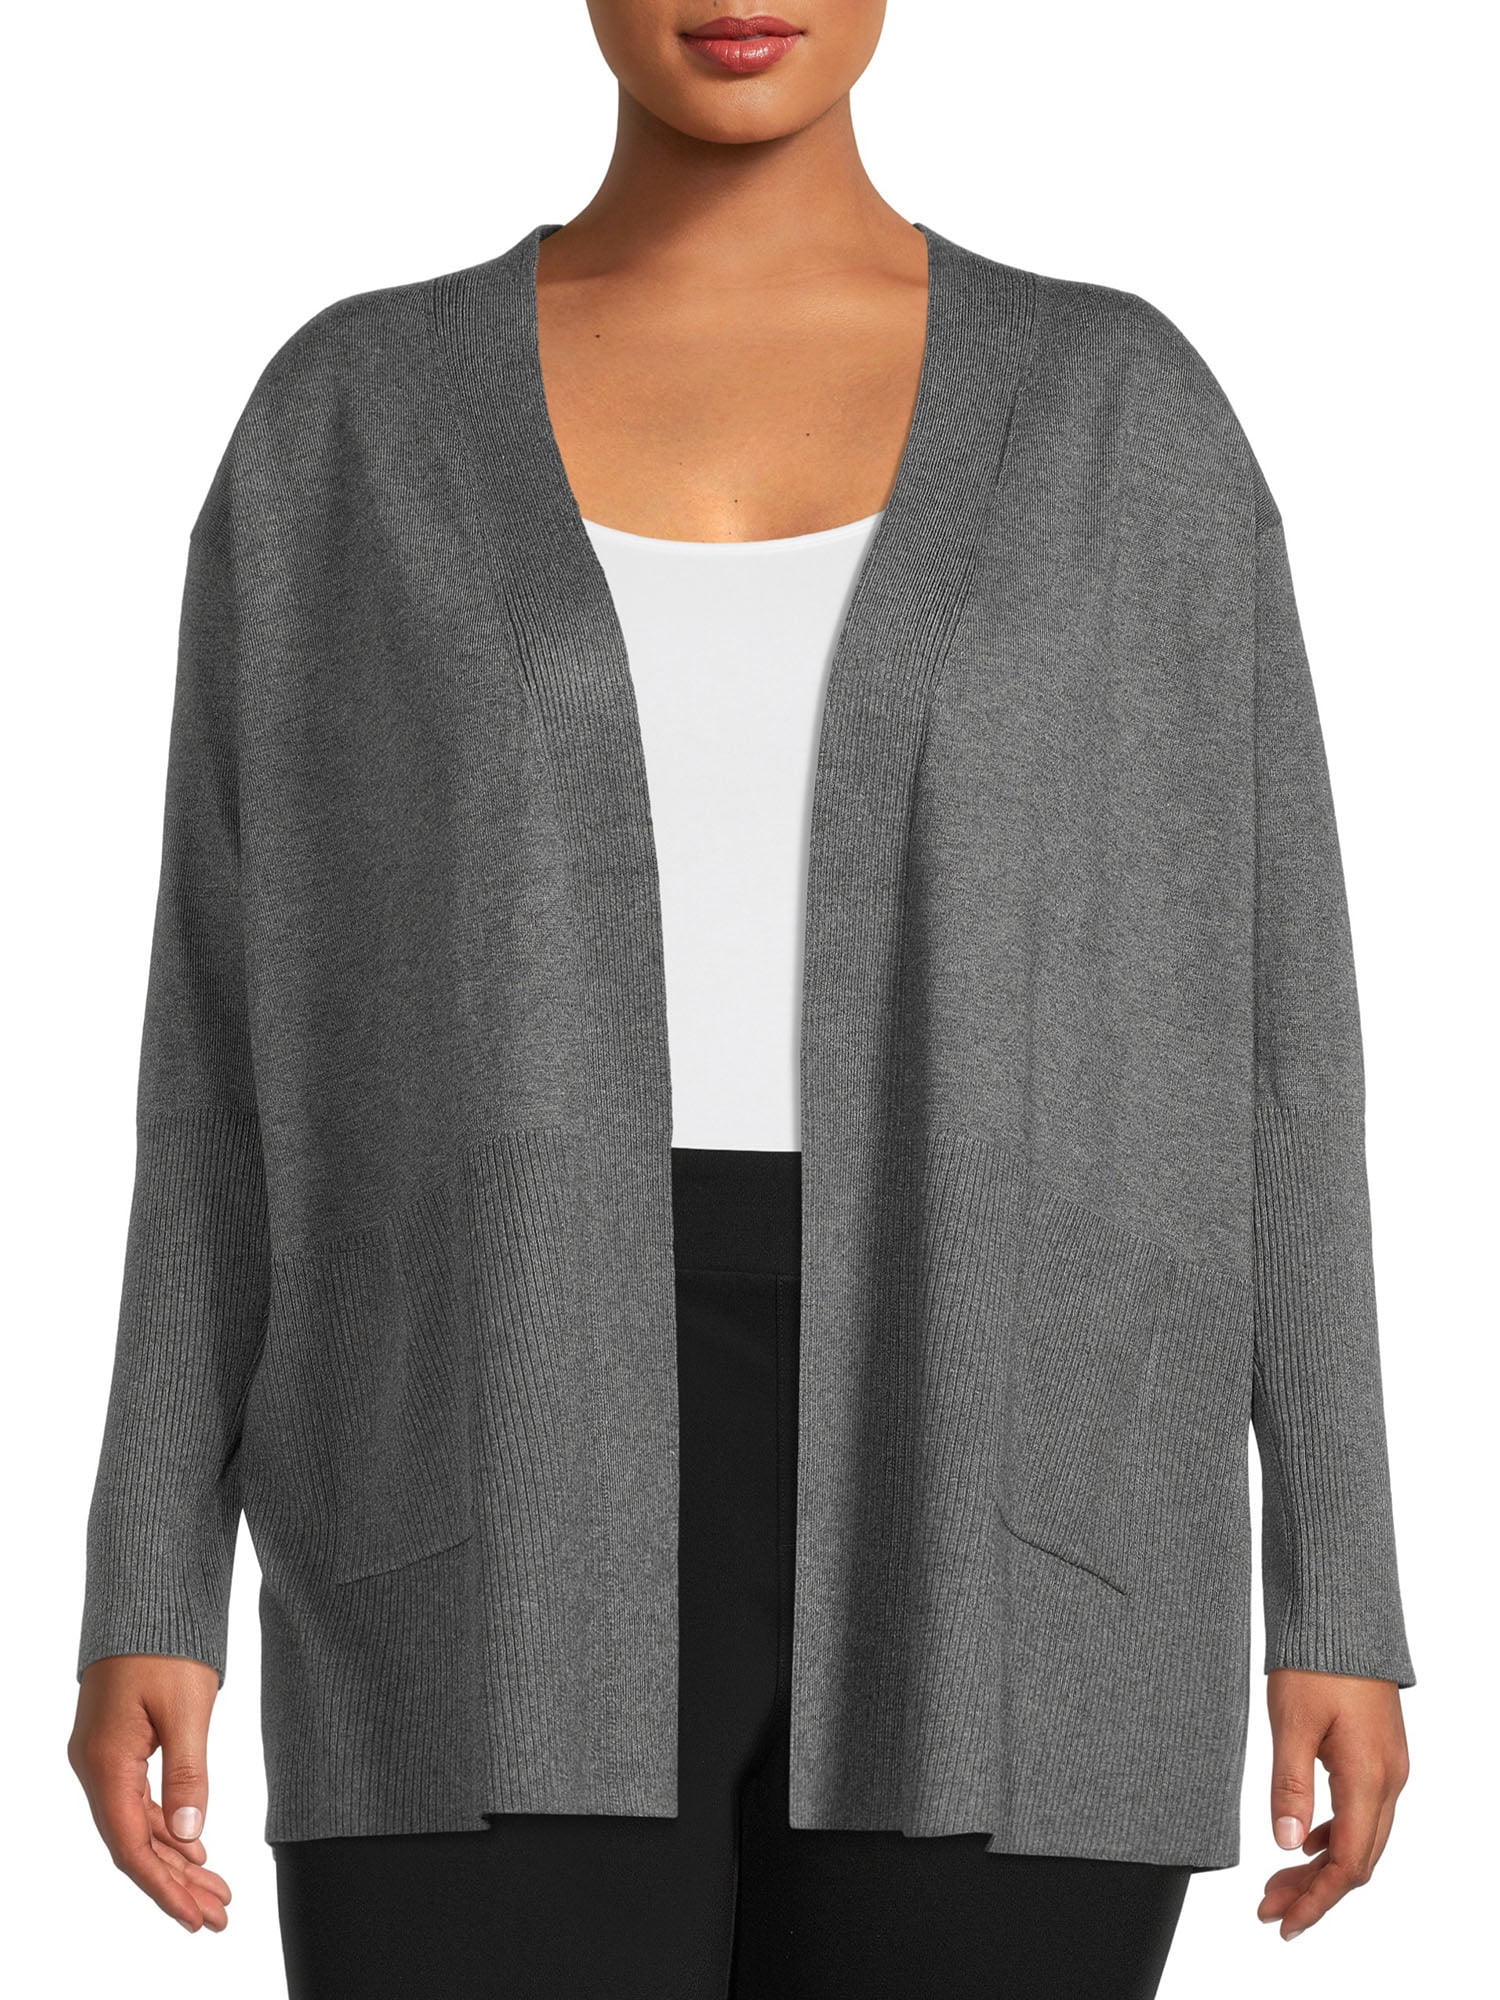 Terra & Sky Women's Plus Size Core Cardigan Sweater